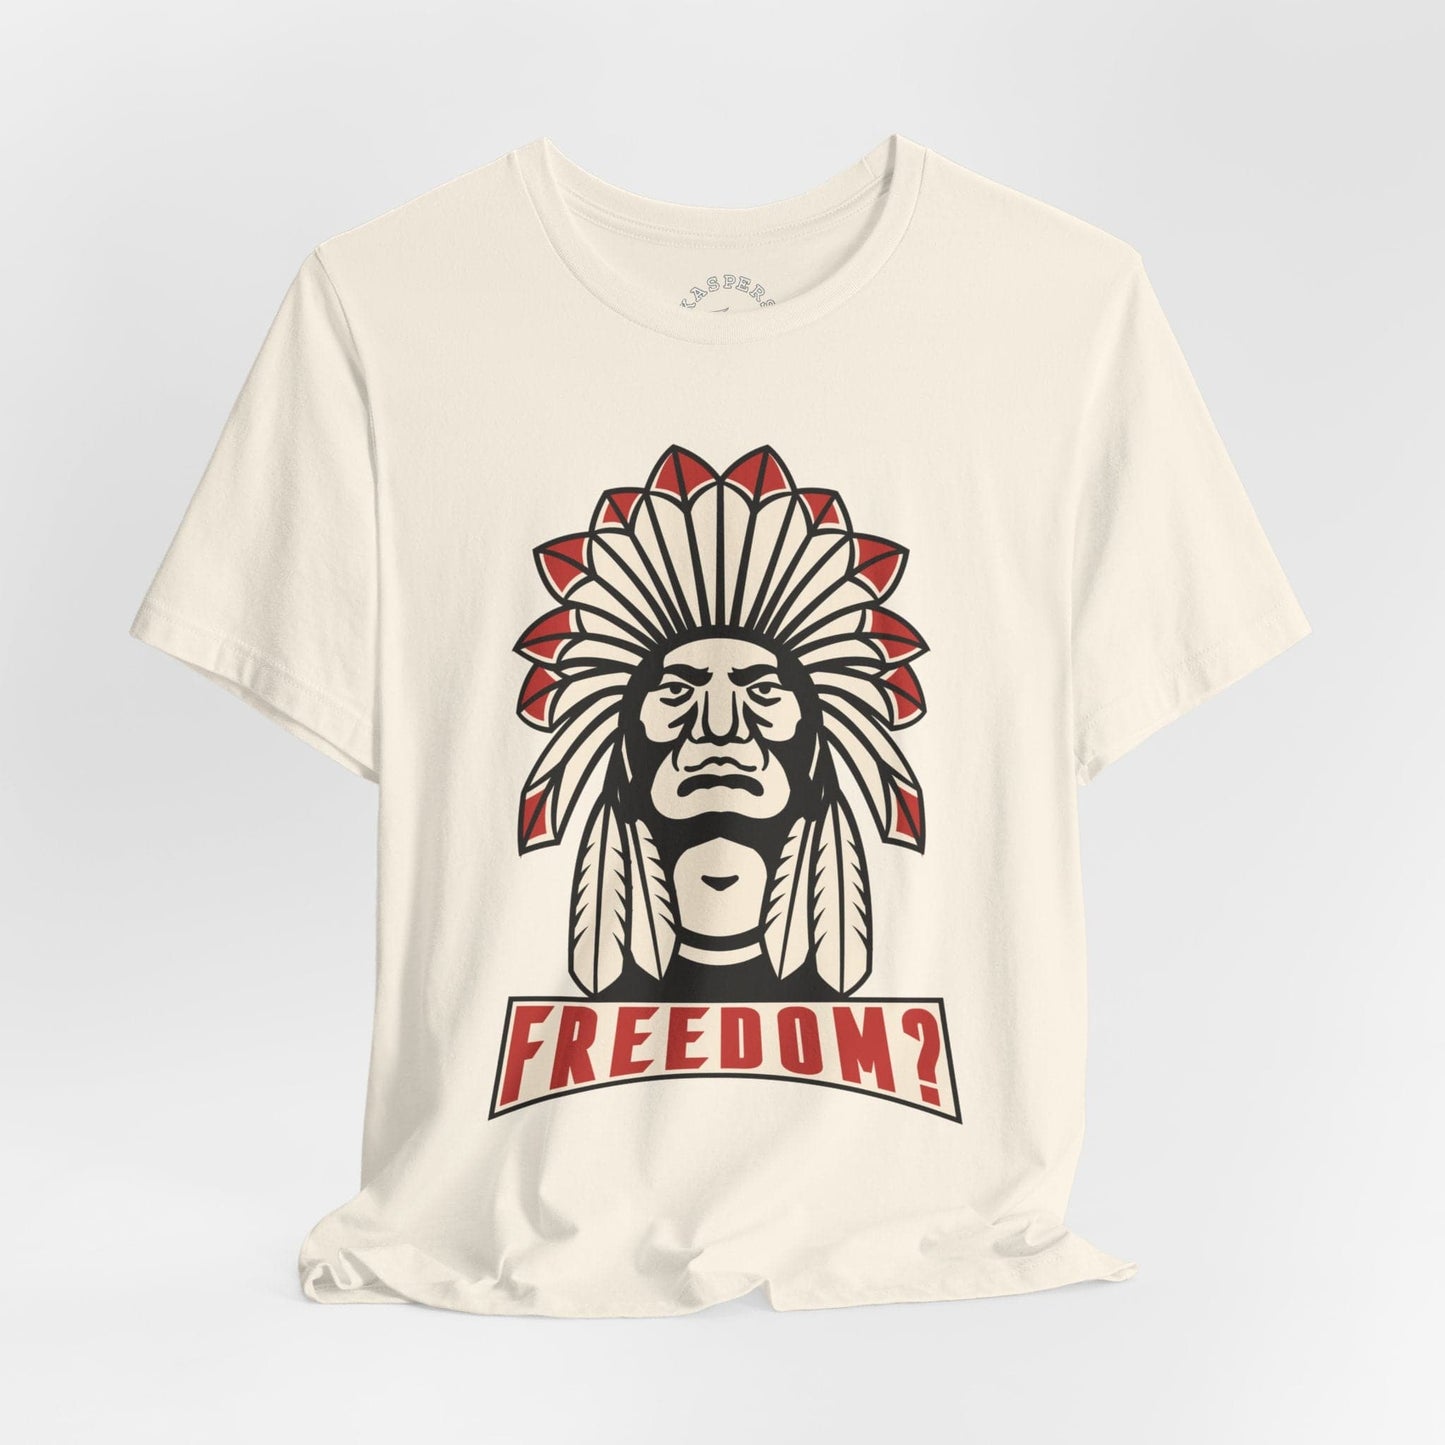 Freedom? T-Shirt